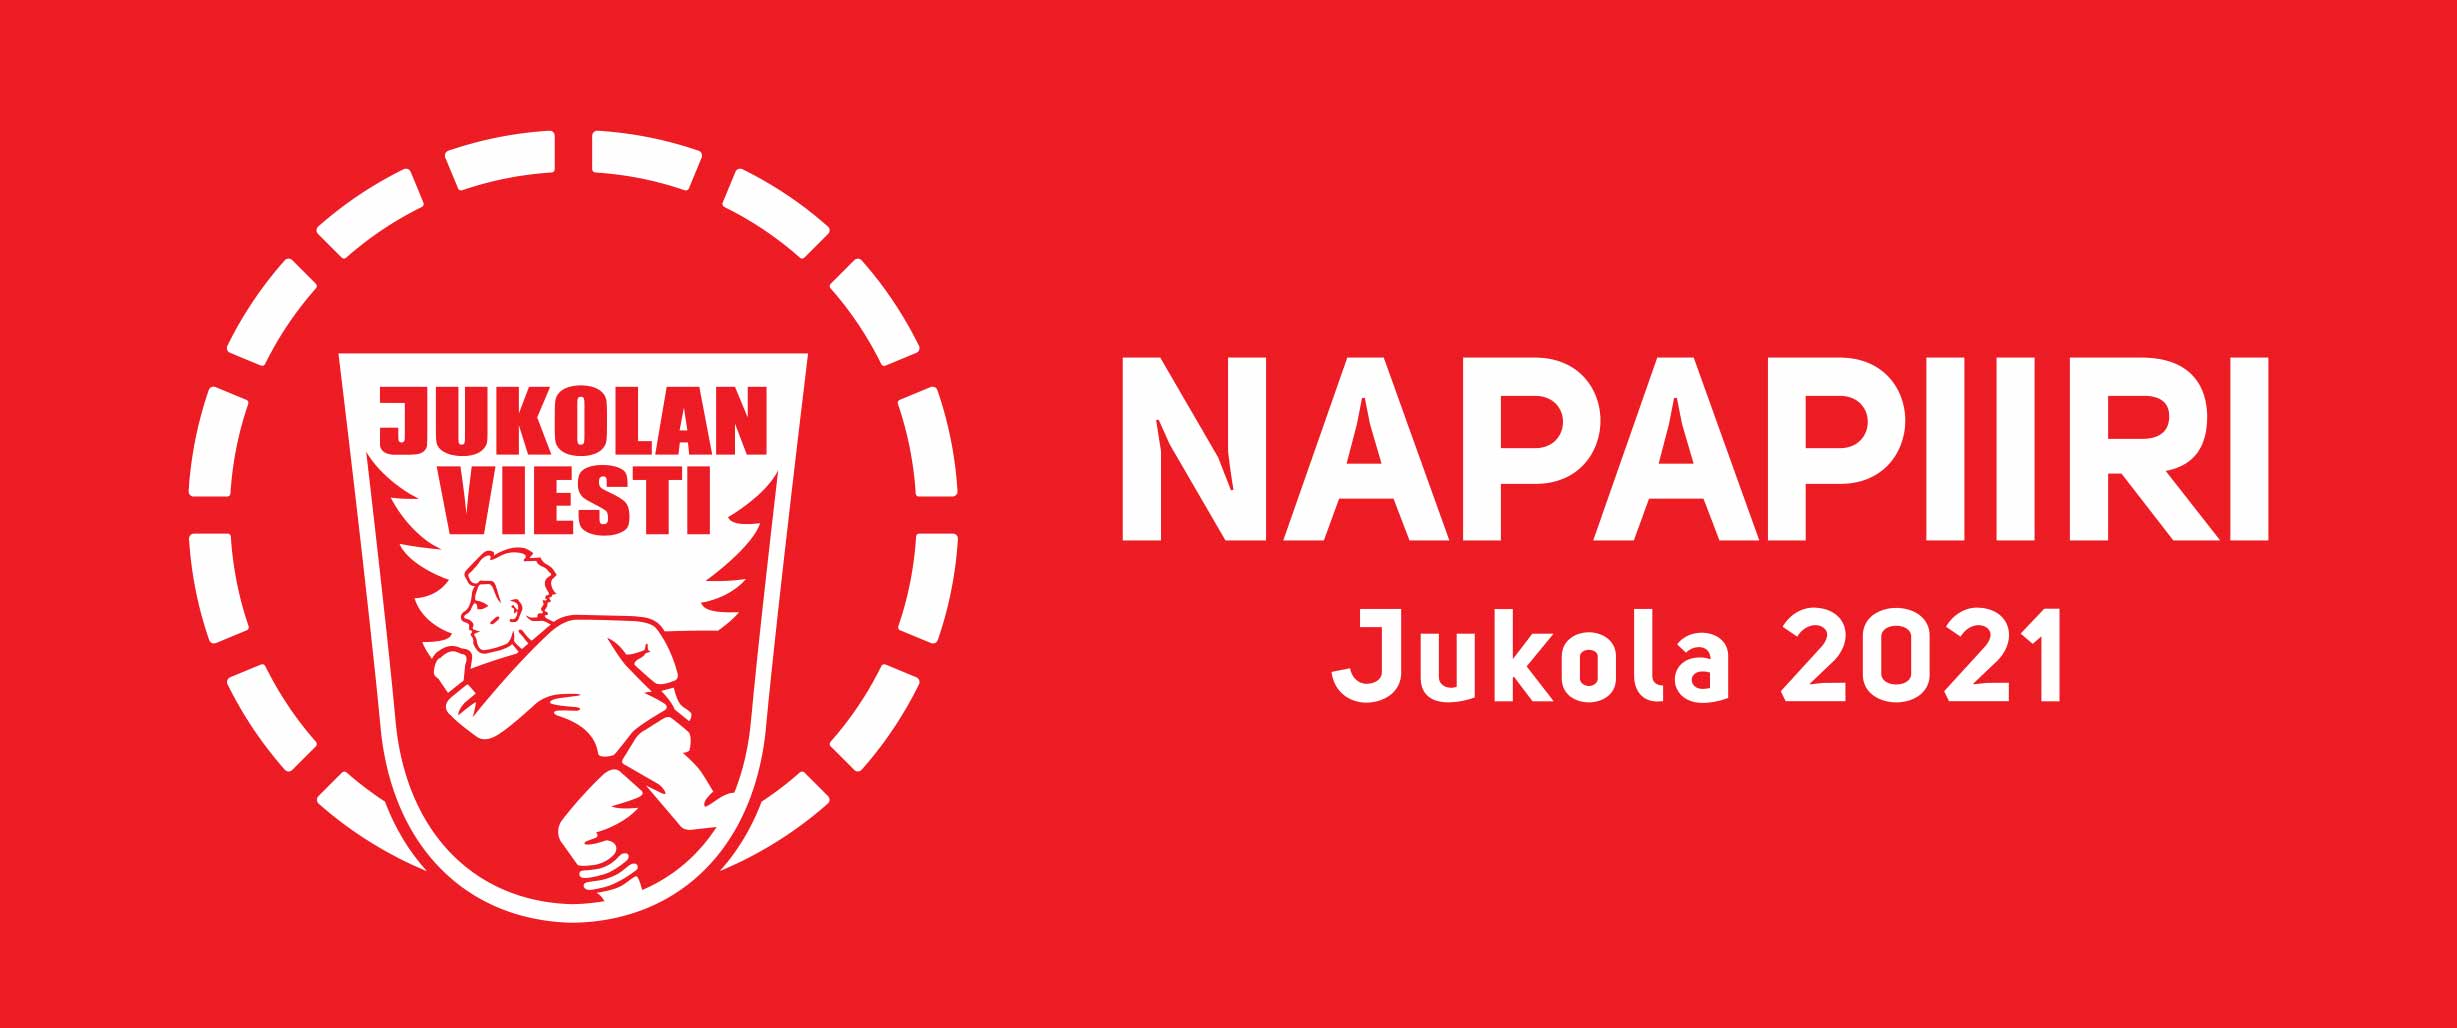 Jukola_Logo_2021_Napapiiri.jpg